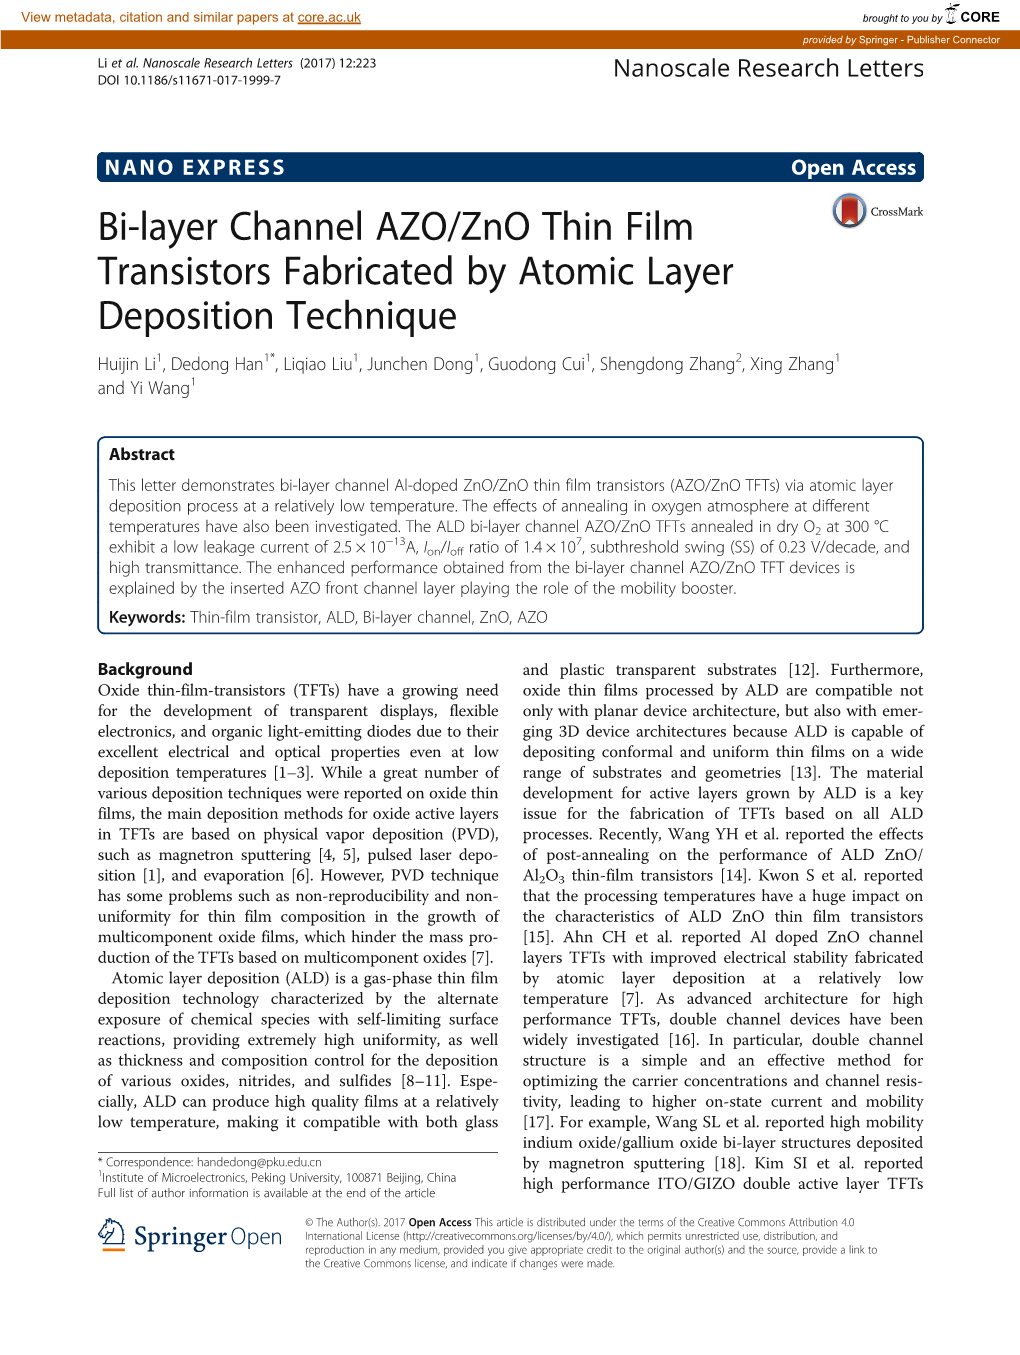 Bi-Layer Channel AZO/Zno Thin Film Transistors Fabricated by Atomic